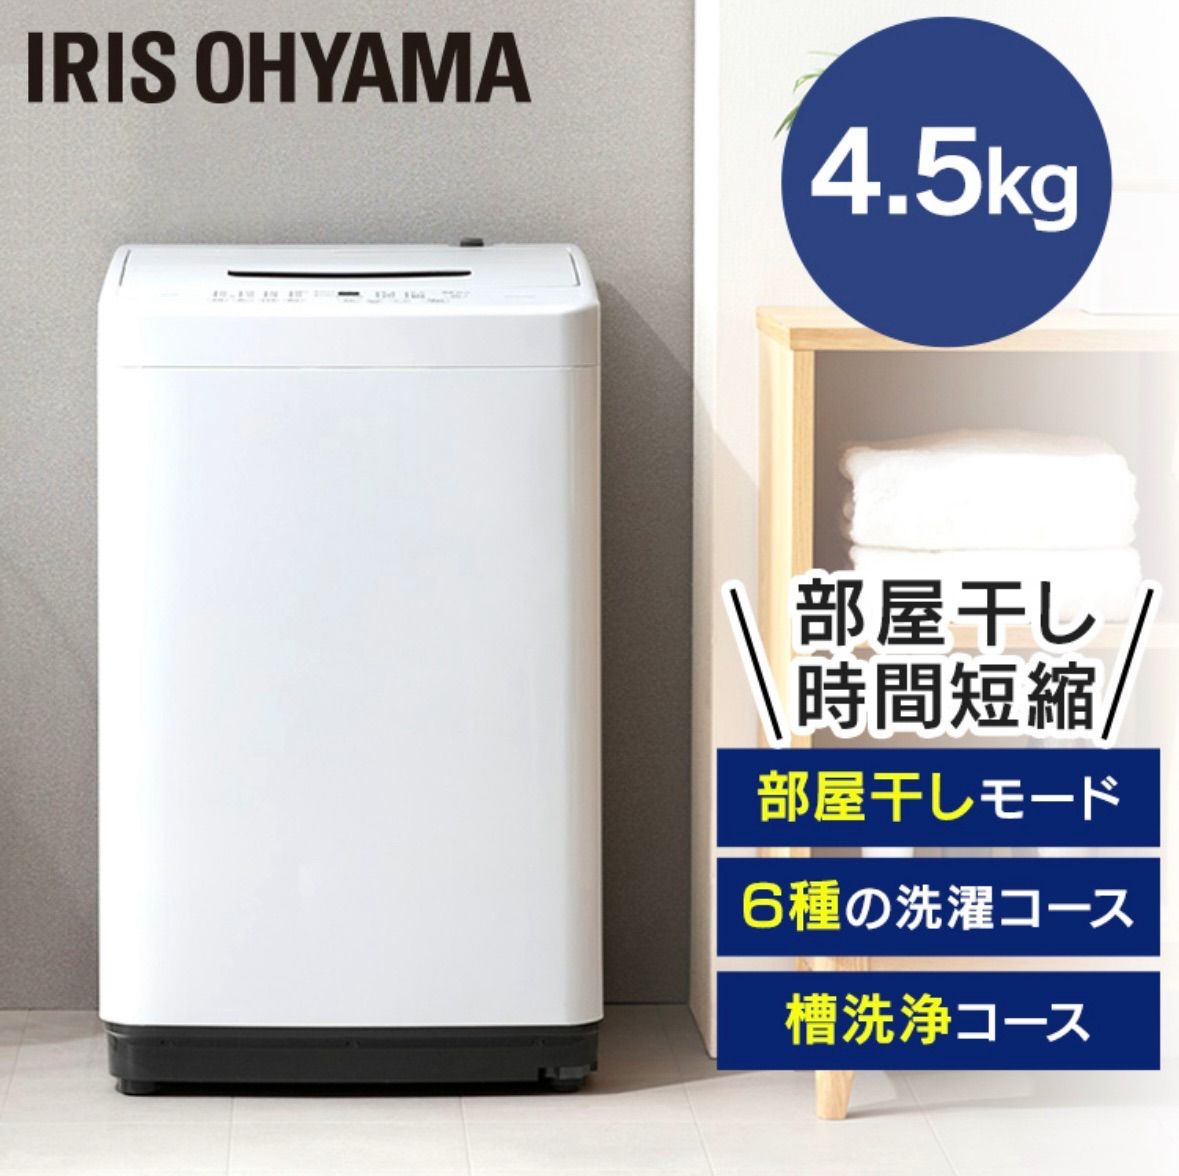 IAW-T451 アイリスオーヤマ IRIS OHYAMA 全自動 洗濯機 4.5kg 2021年製